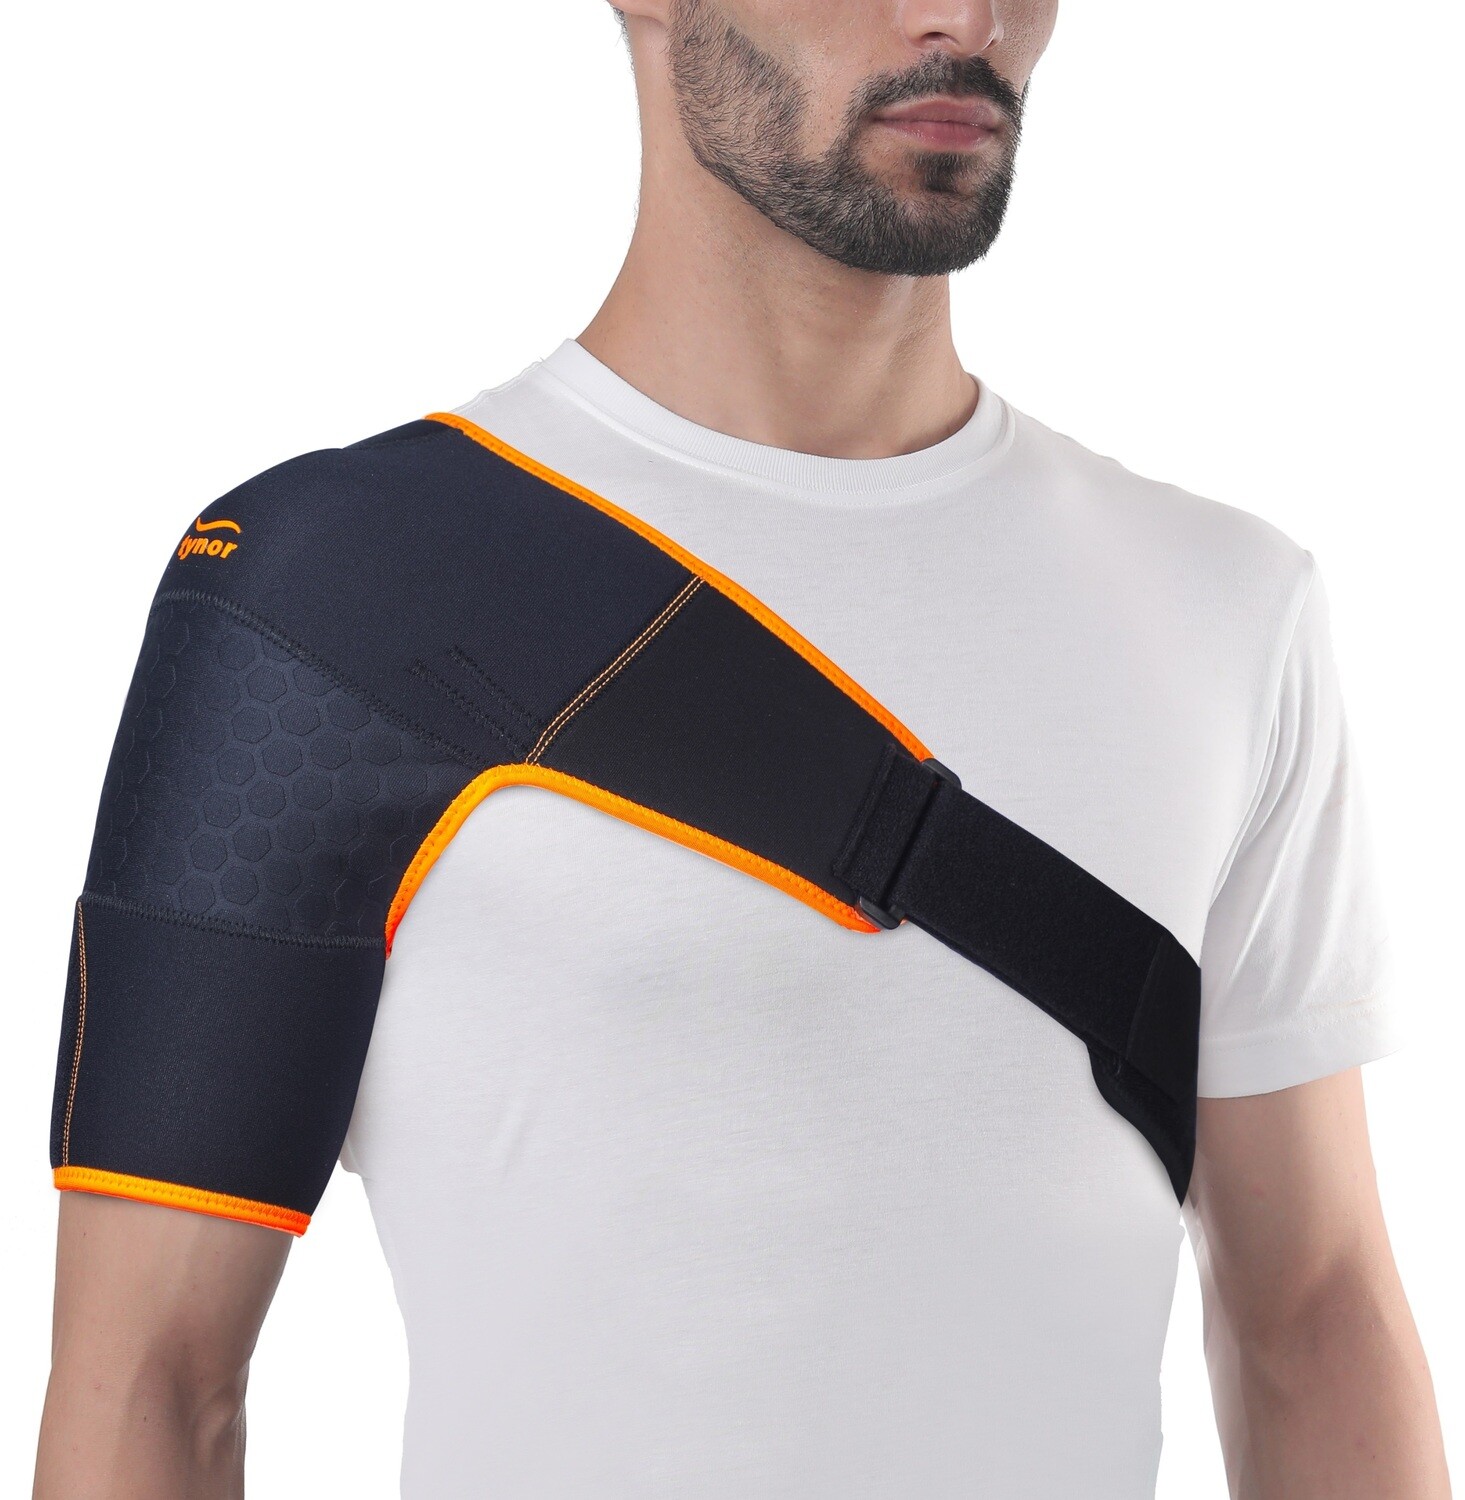 Tynor Shoulder Support Double Lock (Neo), Black & Orange, Universal, 1 Unit